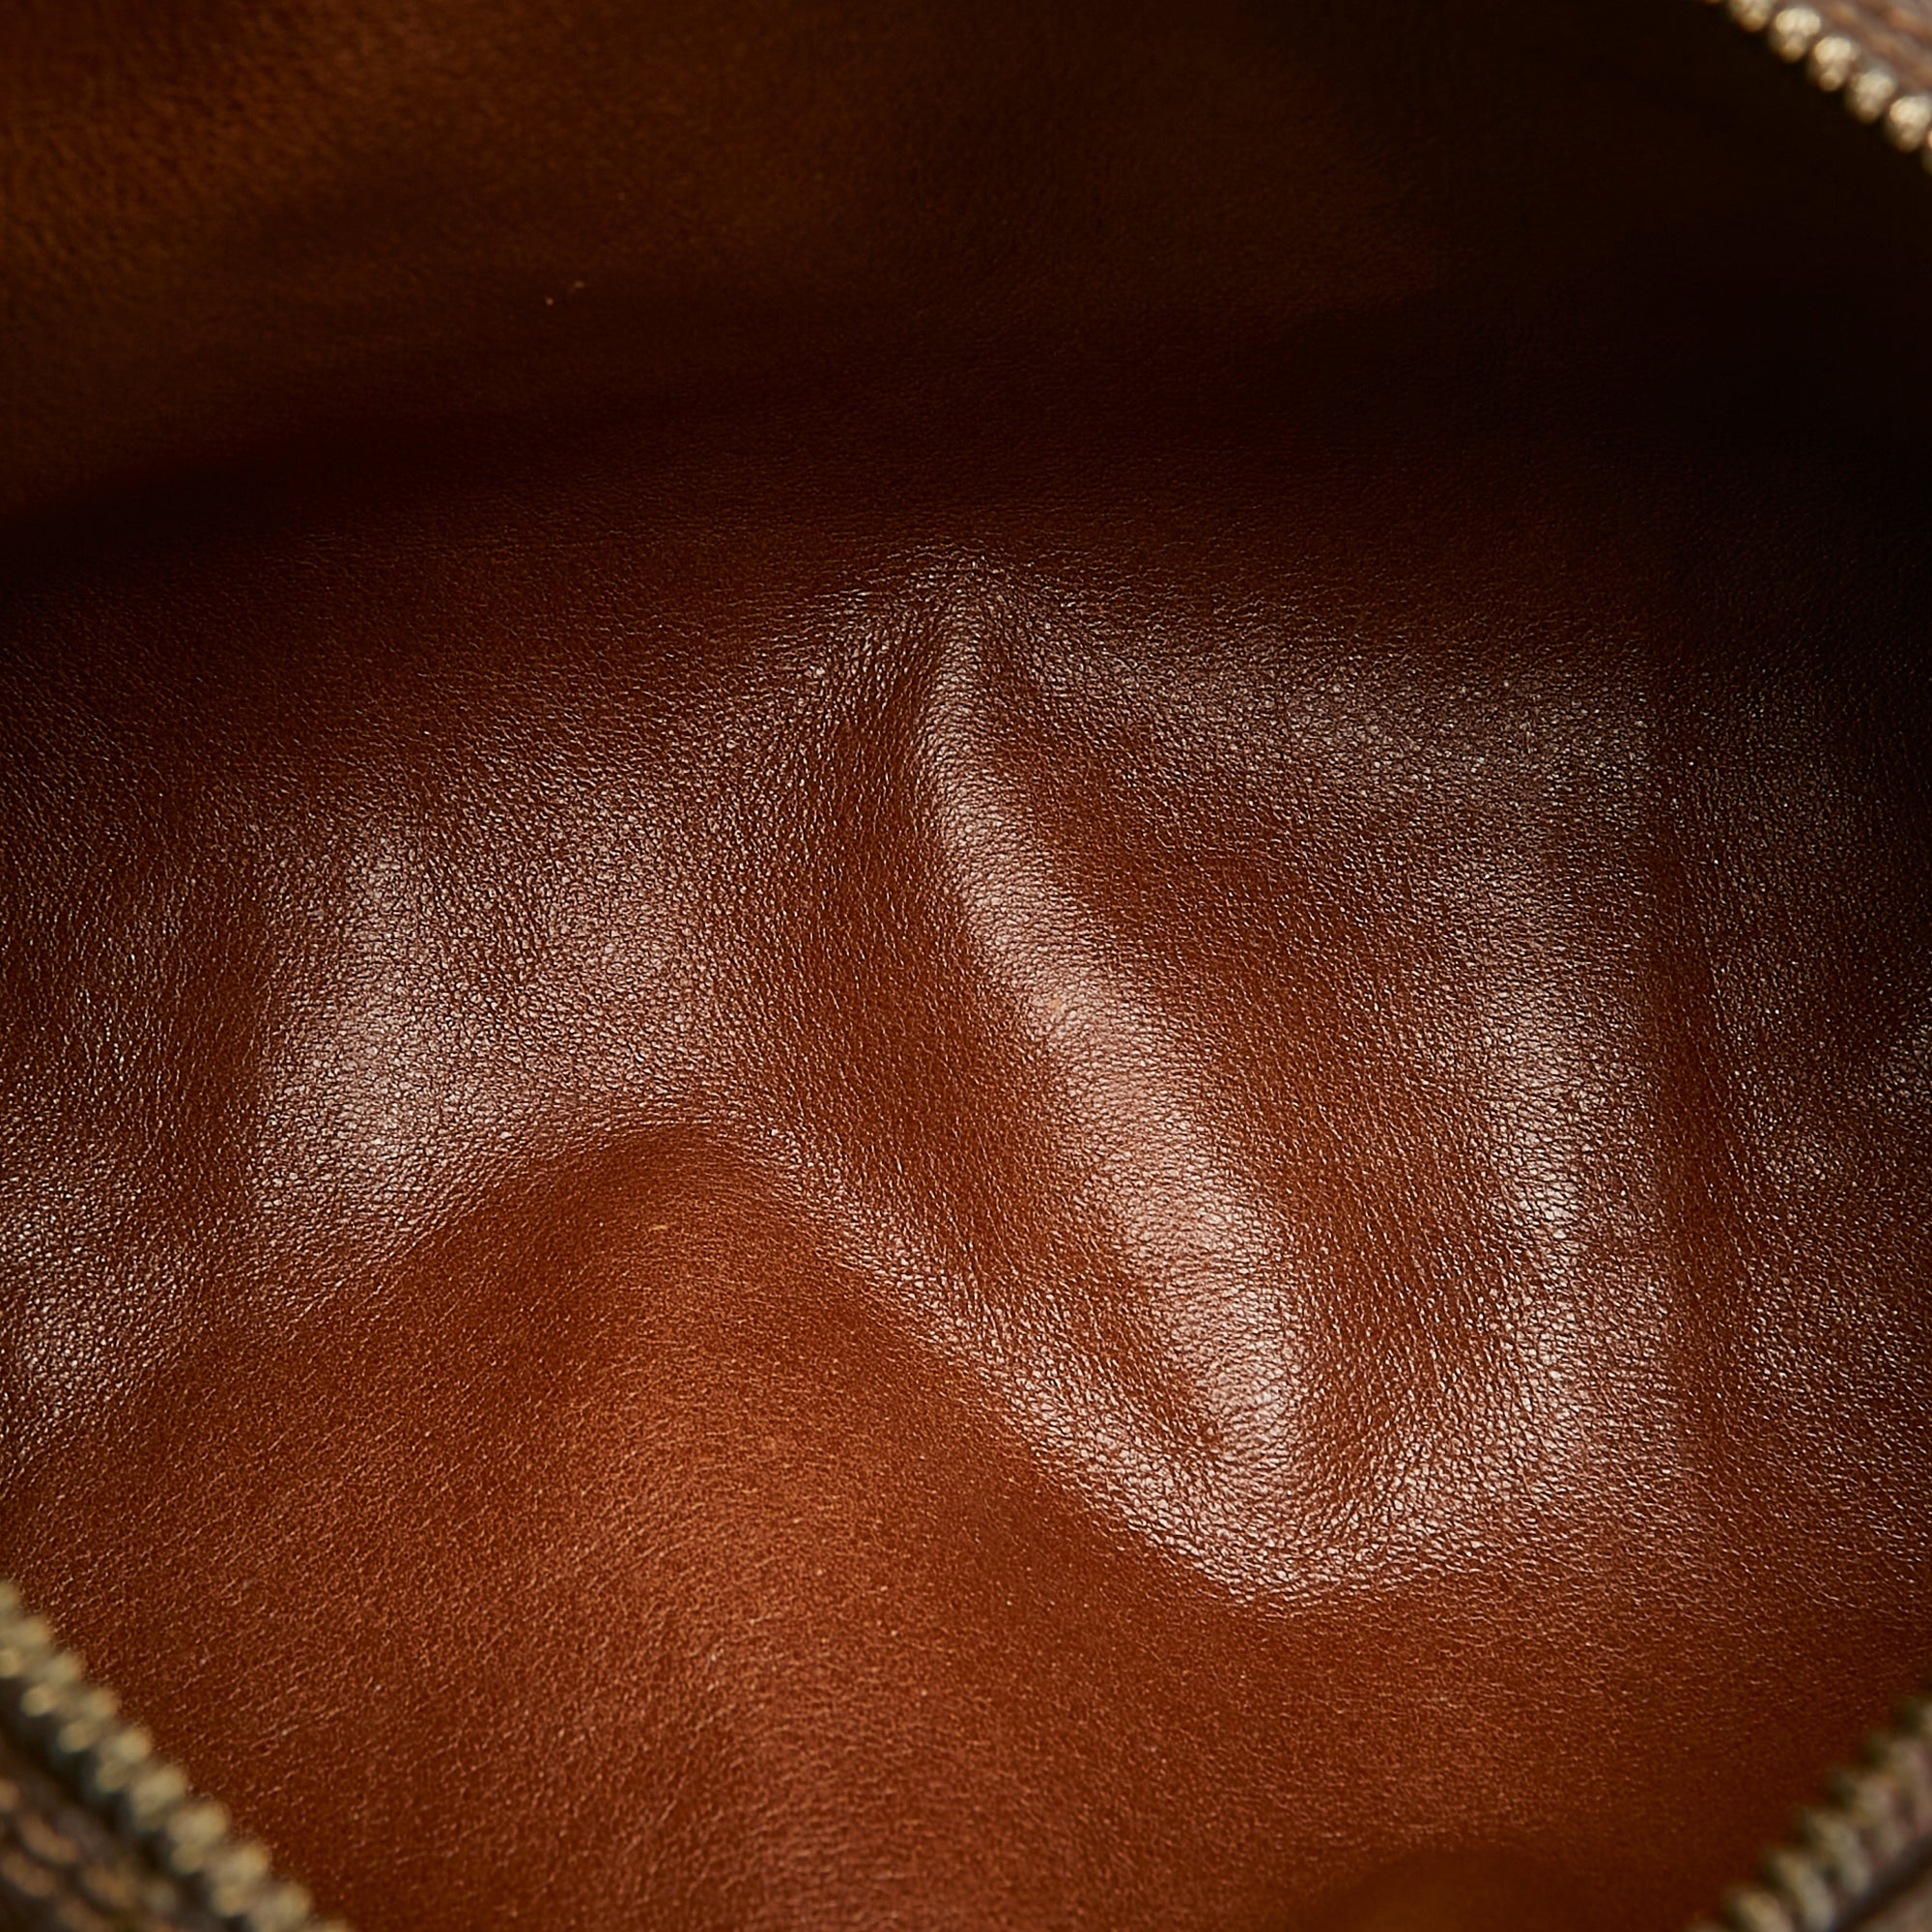 RvceShops Revival, Brown Louis Vuitton Monogram Papillon 30 Handbag